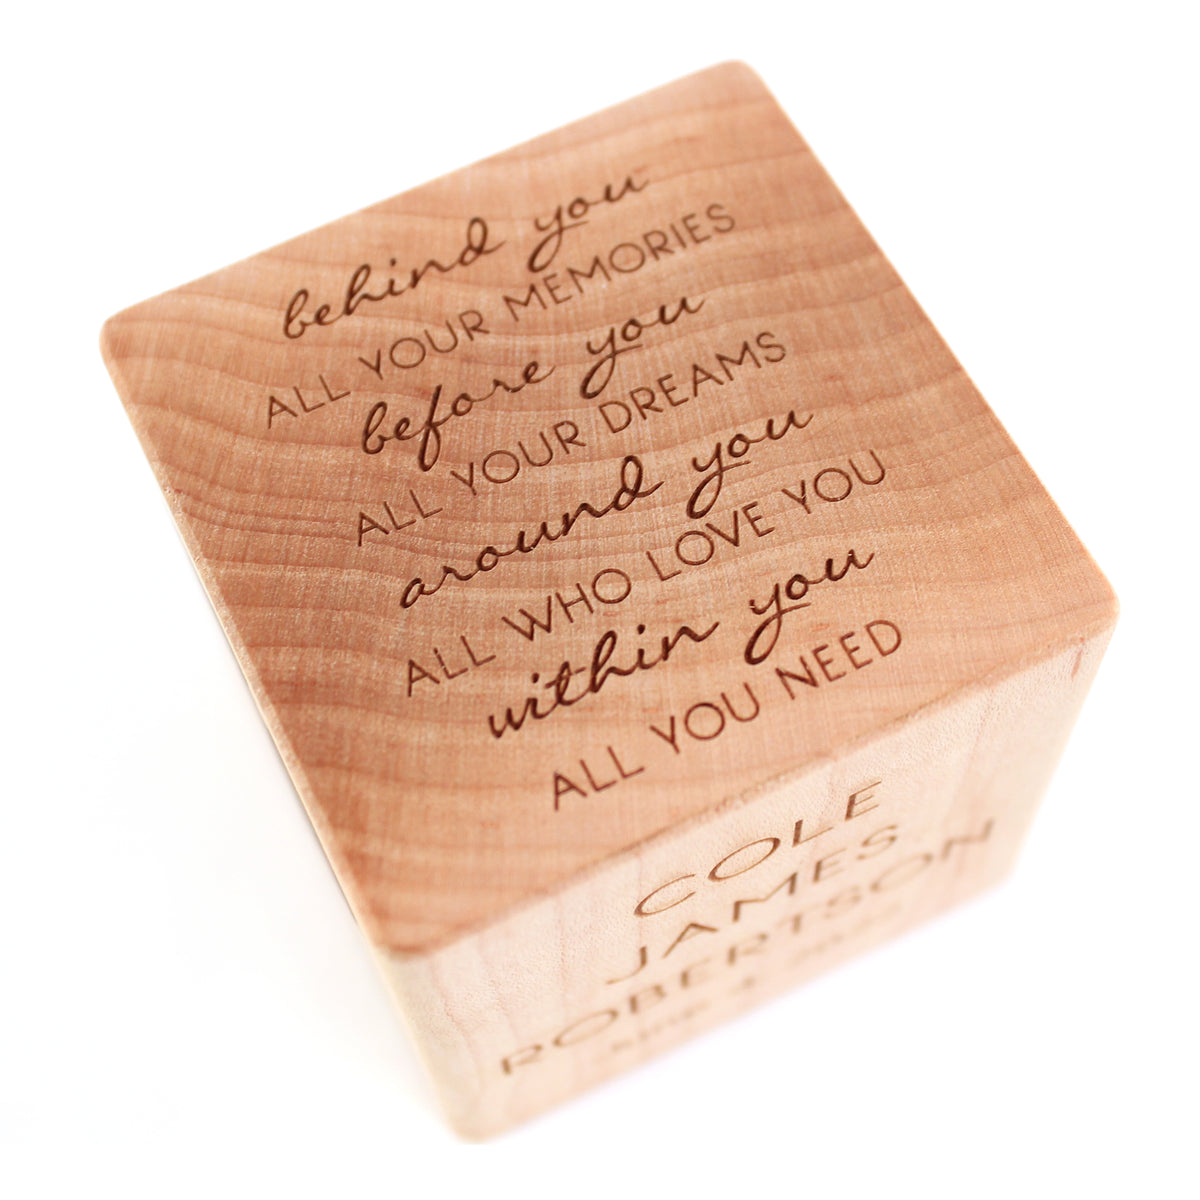 High School Graduation keepsake block engraved wooden block personalized graduation gift